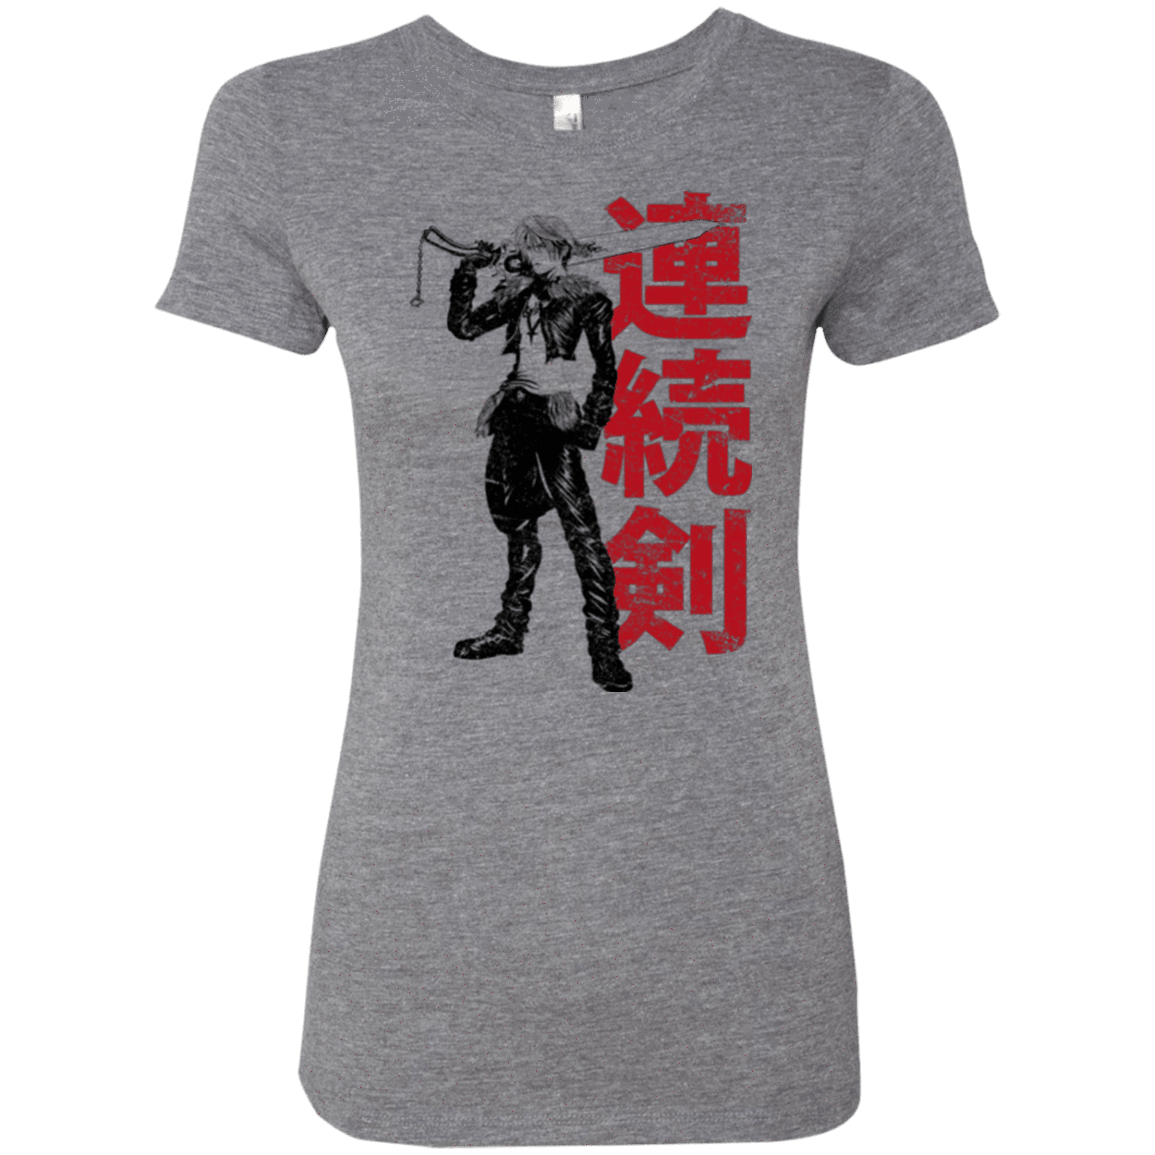 T-Shirts Premium Heather / Small Seed Mercenary Women's Triblend T-Shirt